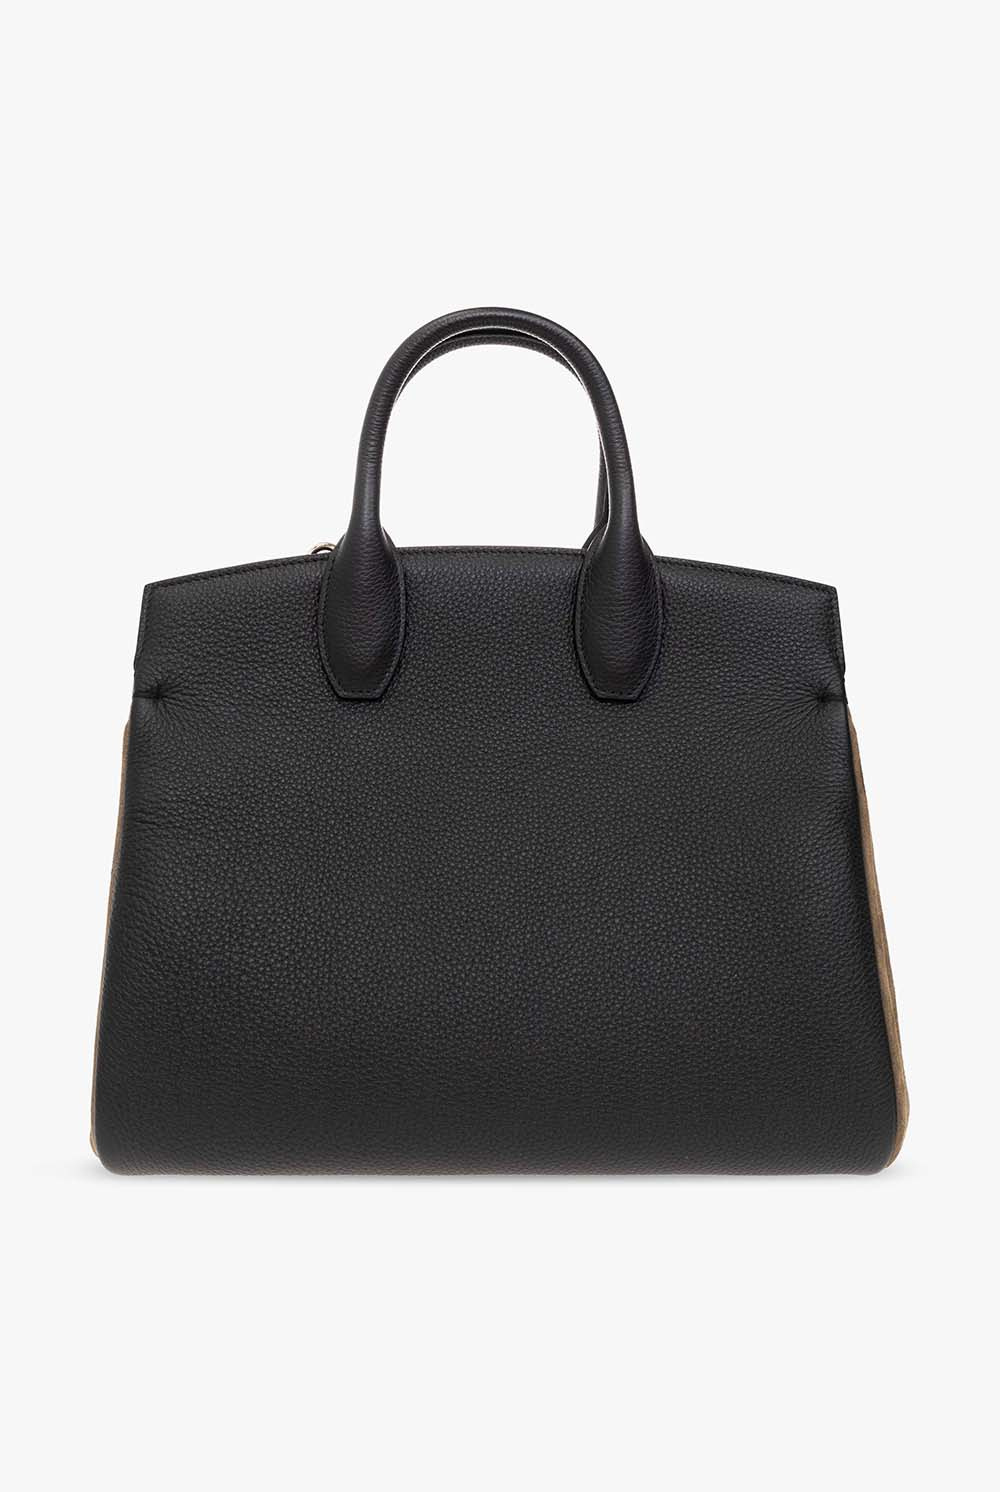 Salvatore Ferragamo ‘The Studio’ shoulder bag